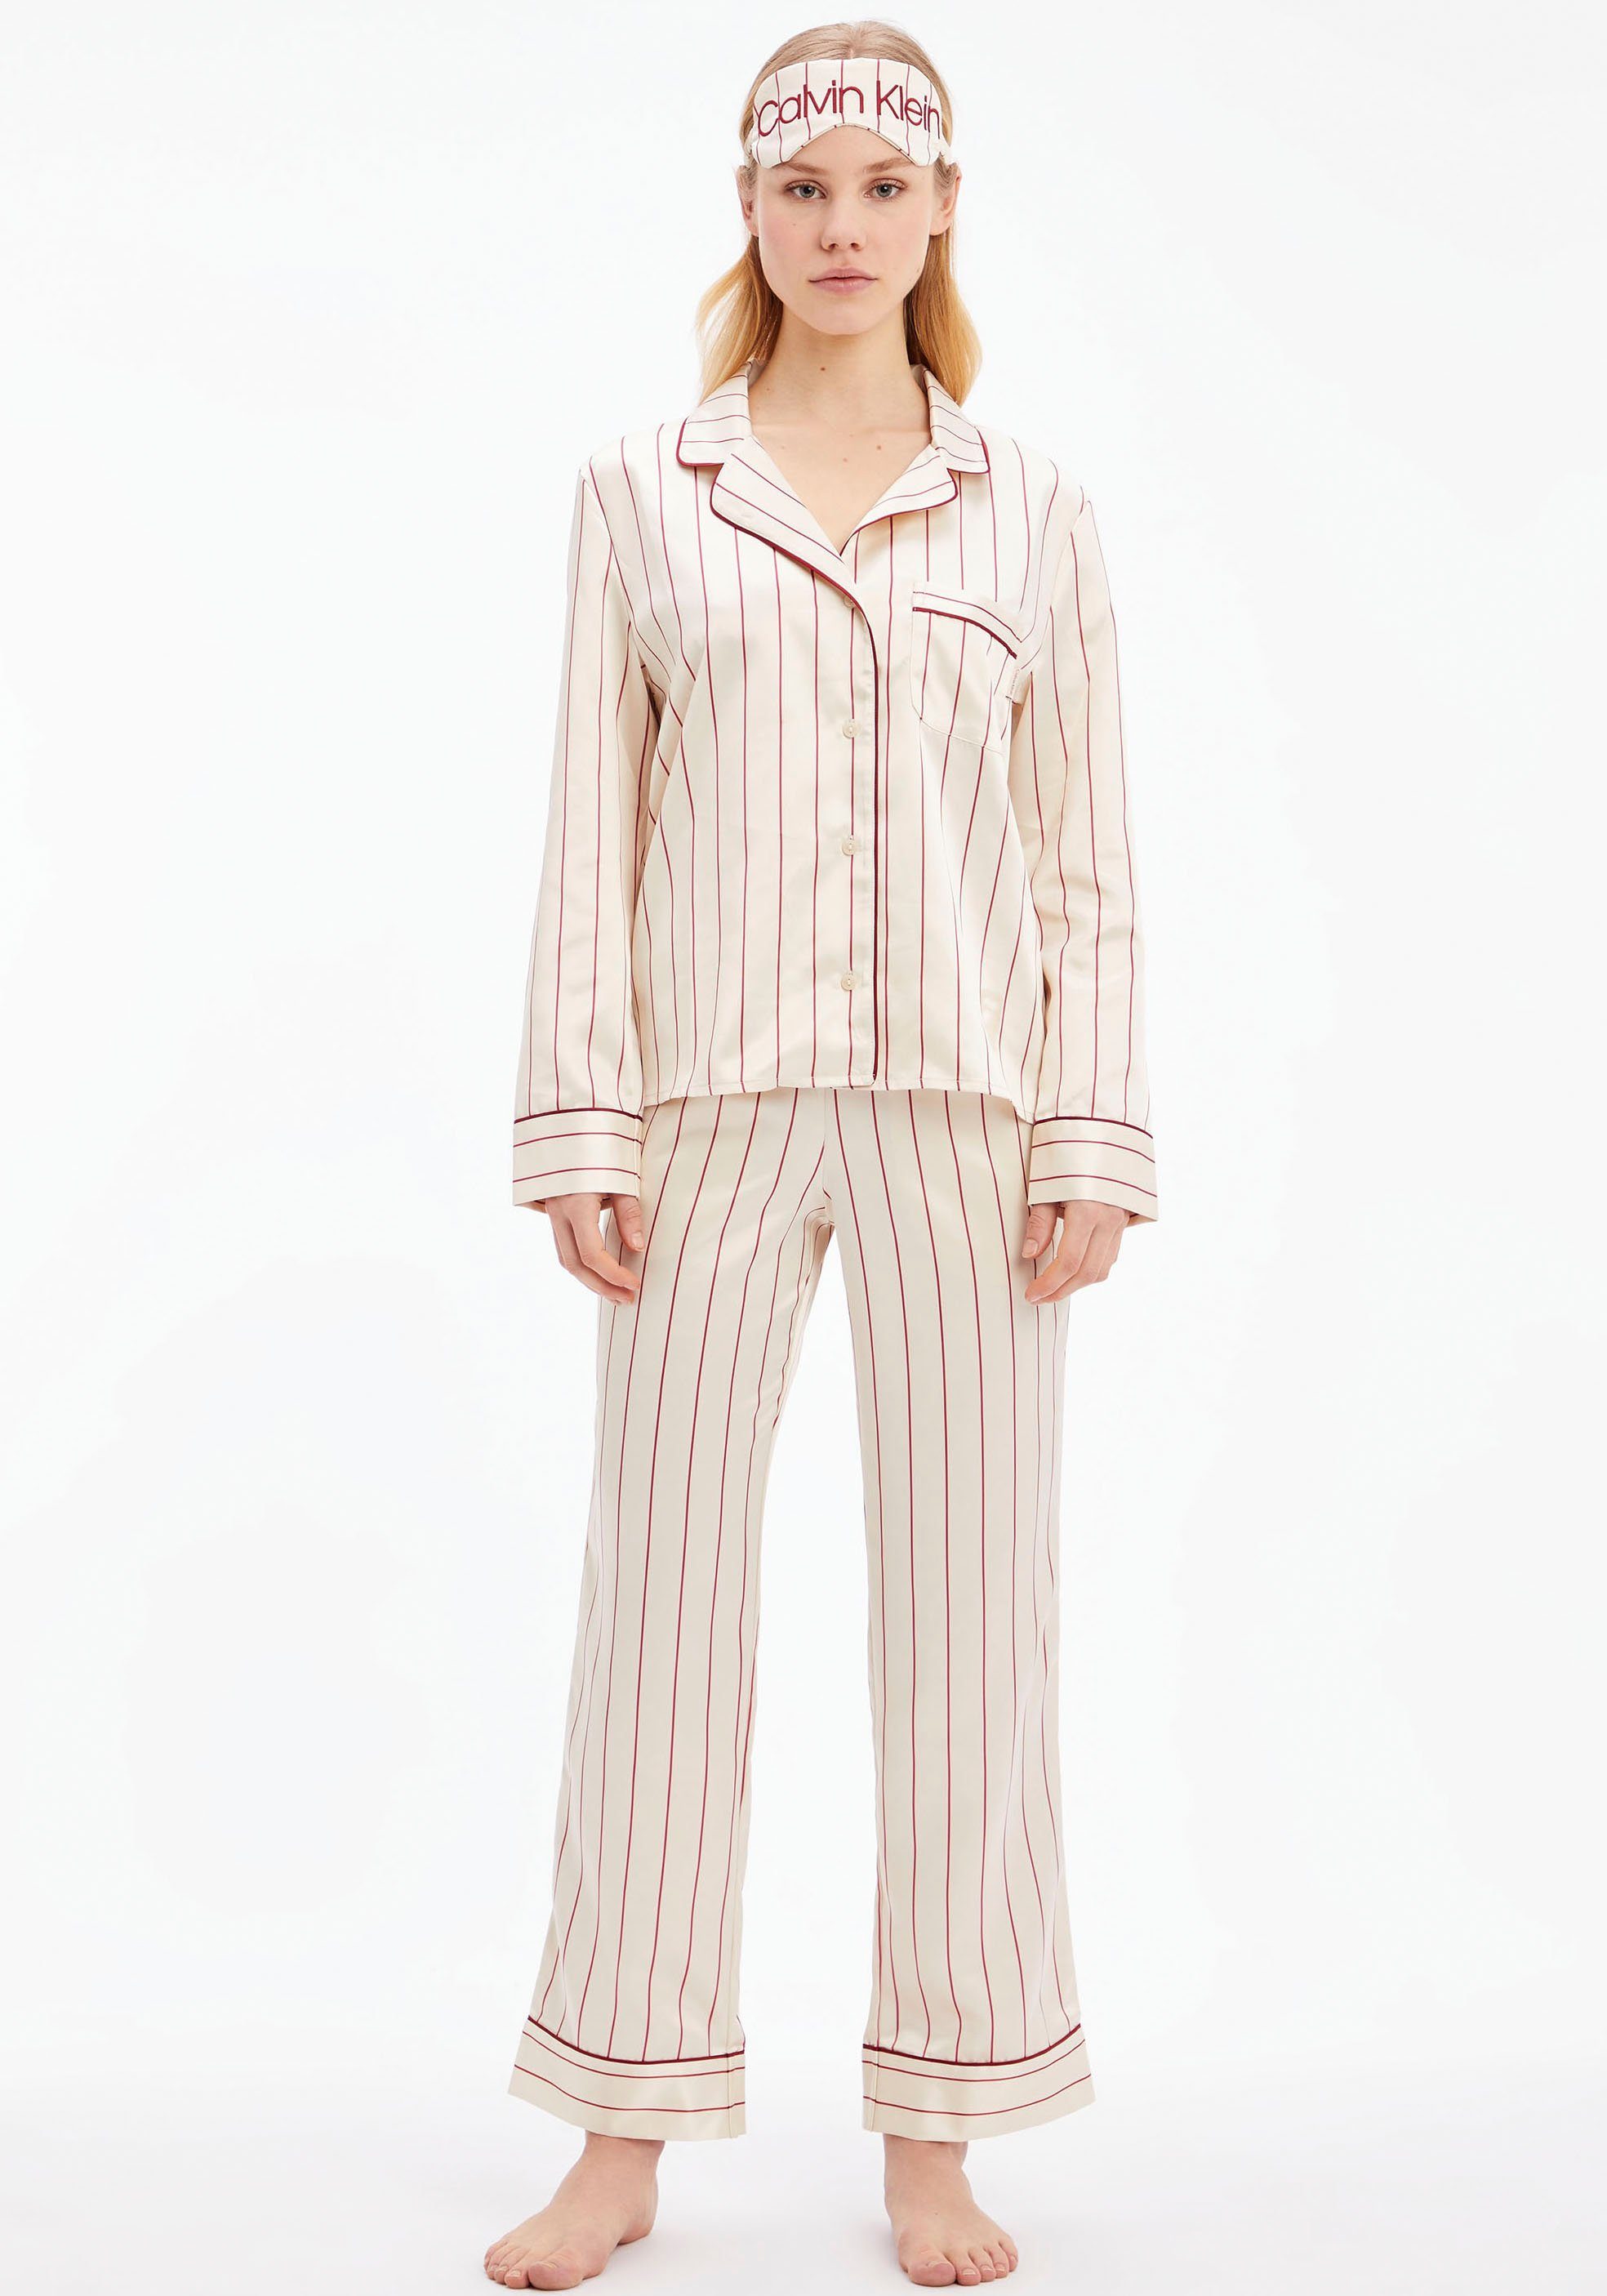 Calvin Klein PANT Underwear im 3 Stück) (Set, L/S SET Pyjama Schlafmaske & Set Pyjama